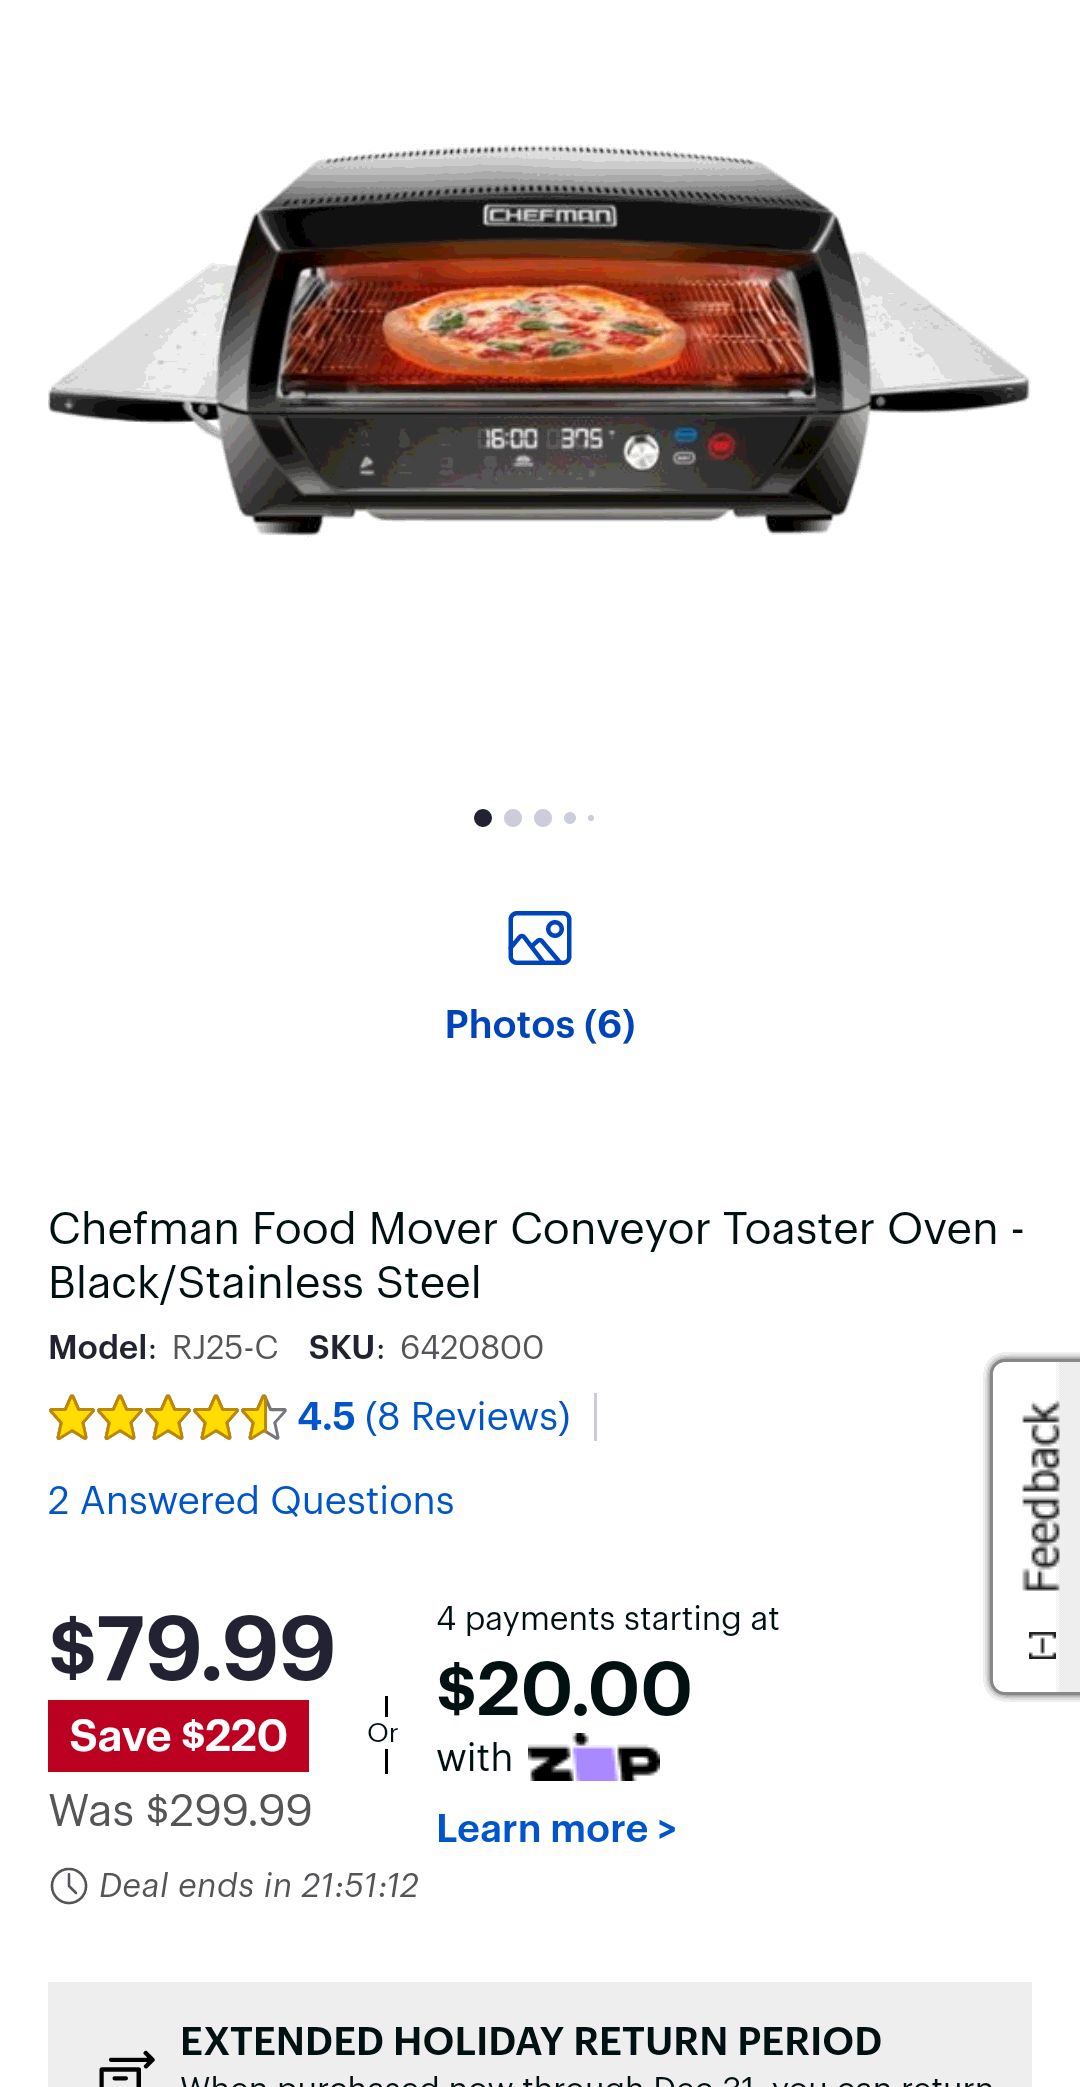 Chefman Food Mover Conveyor Toaster Oven Black/Stainless Steel RJ25-C - Best Buy烤箱